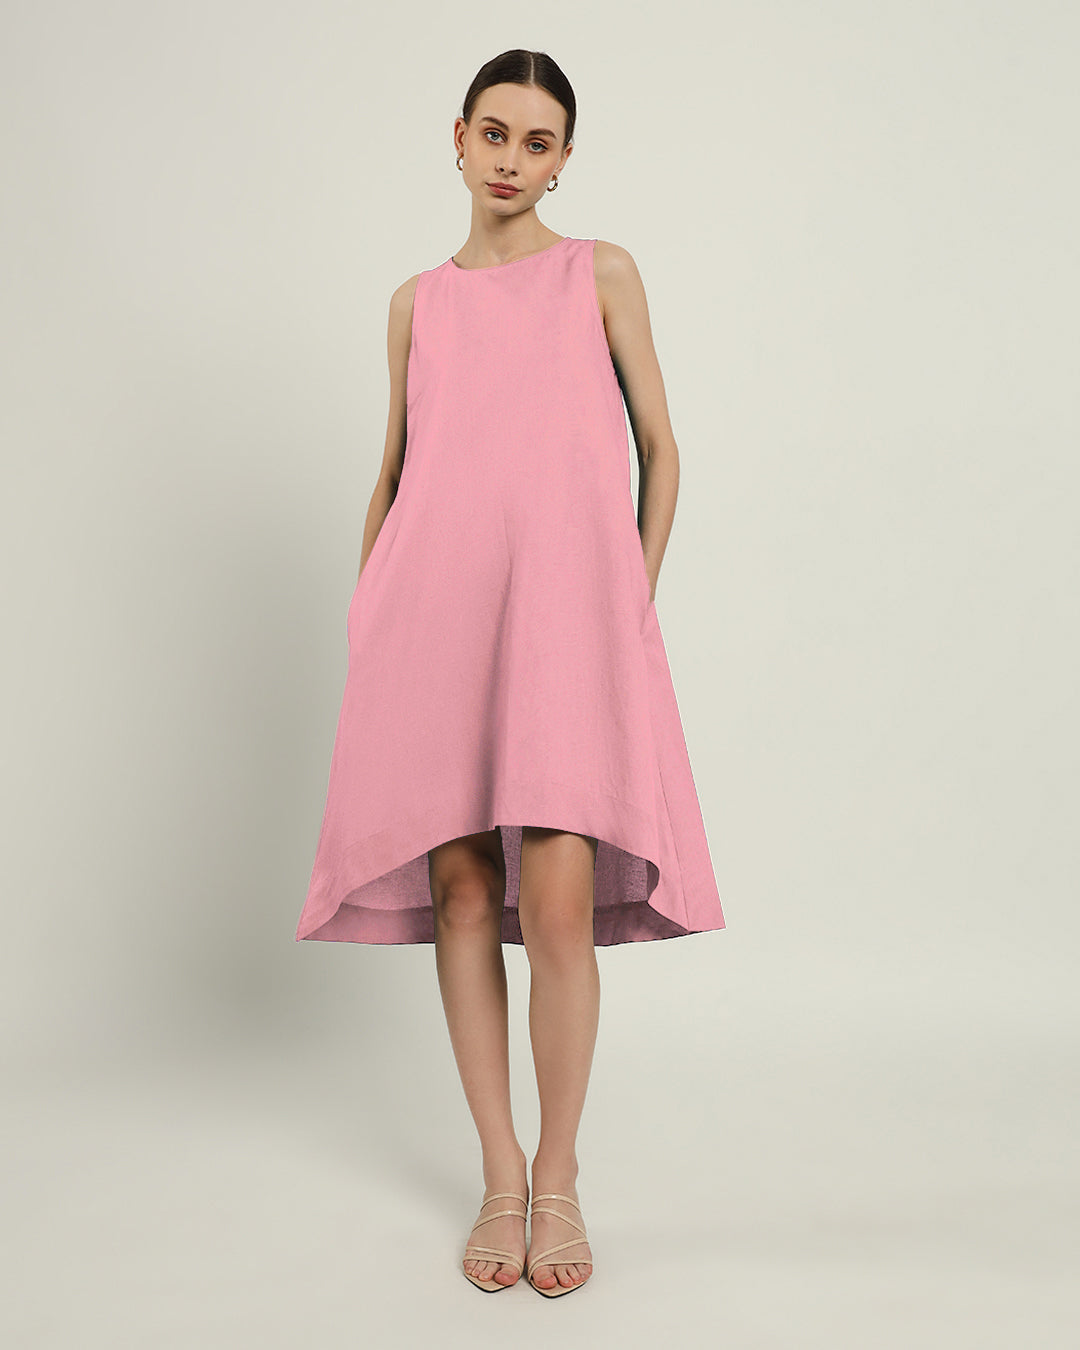 The Odesa Fondant Pink Cotton Dress